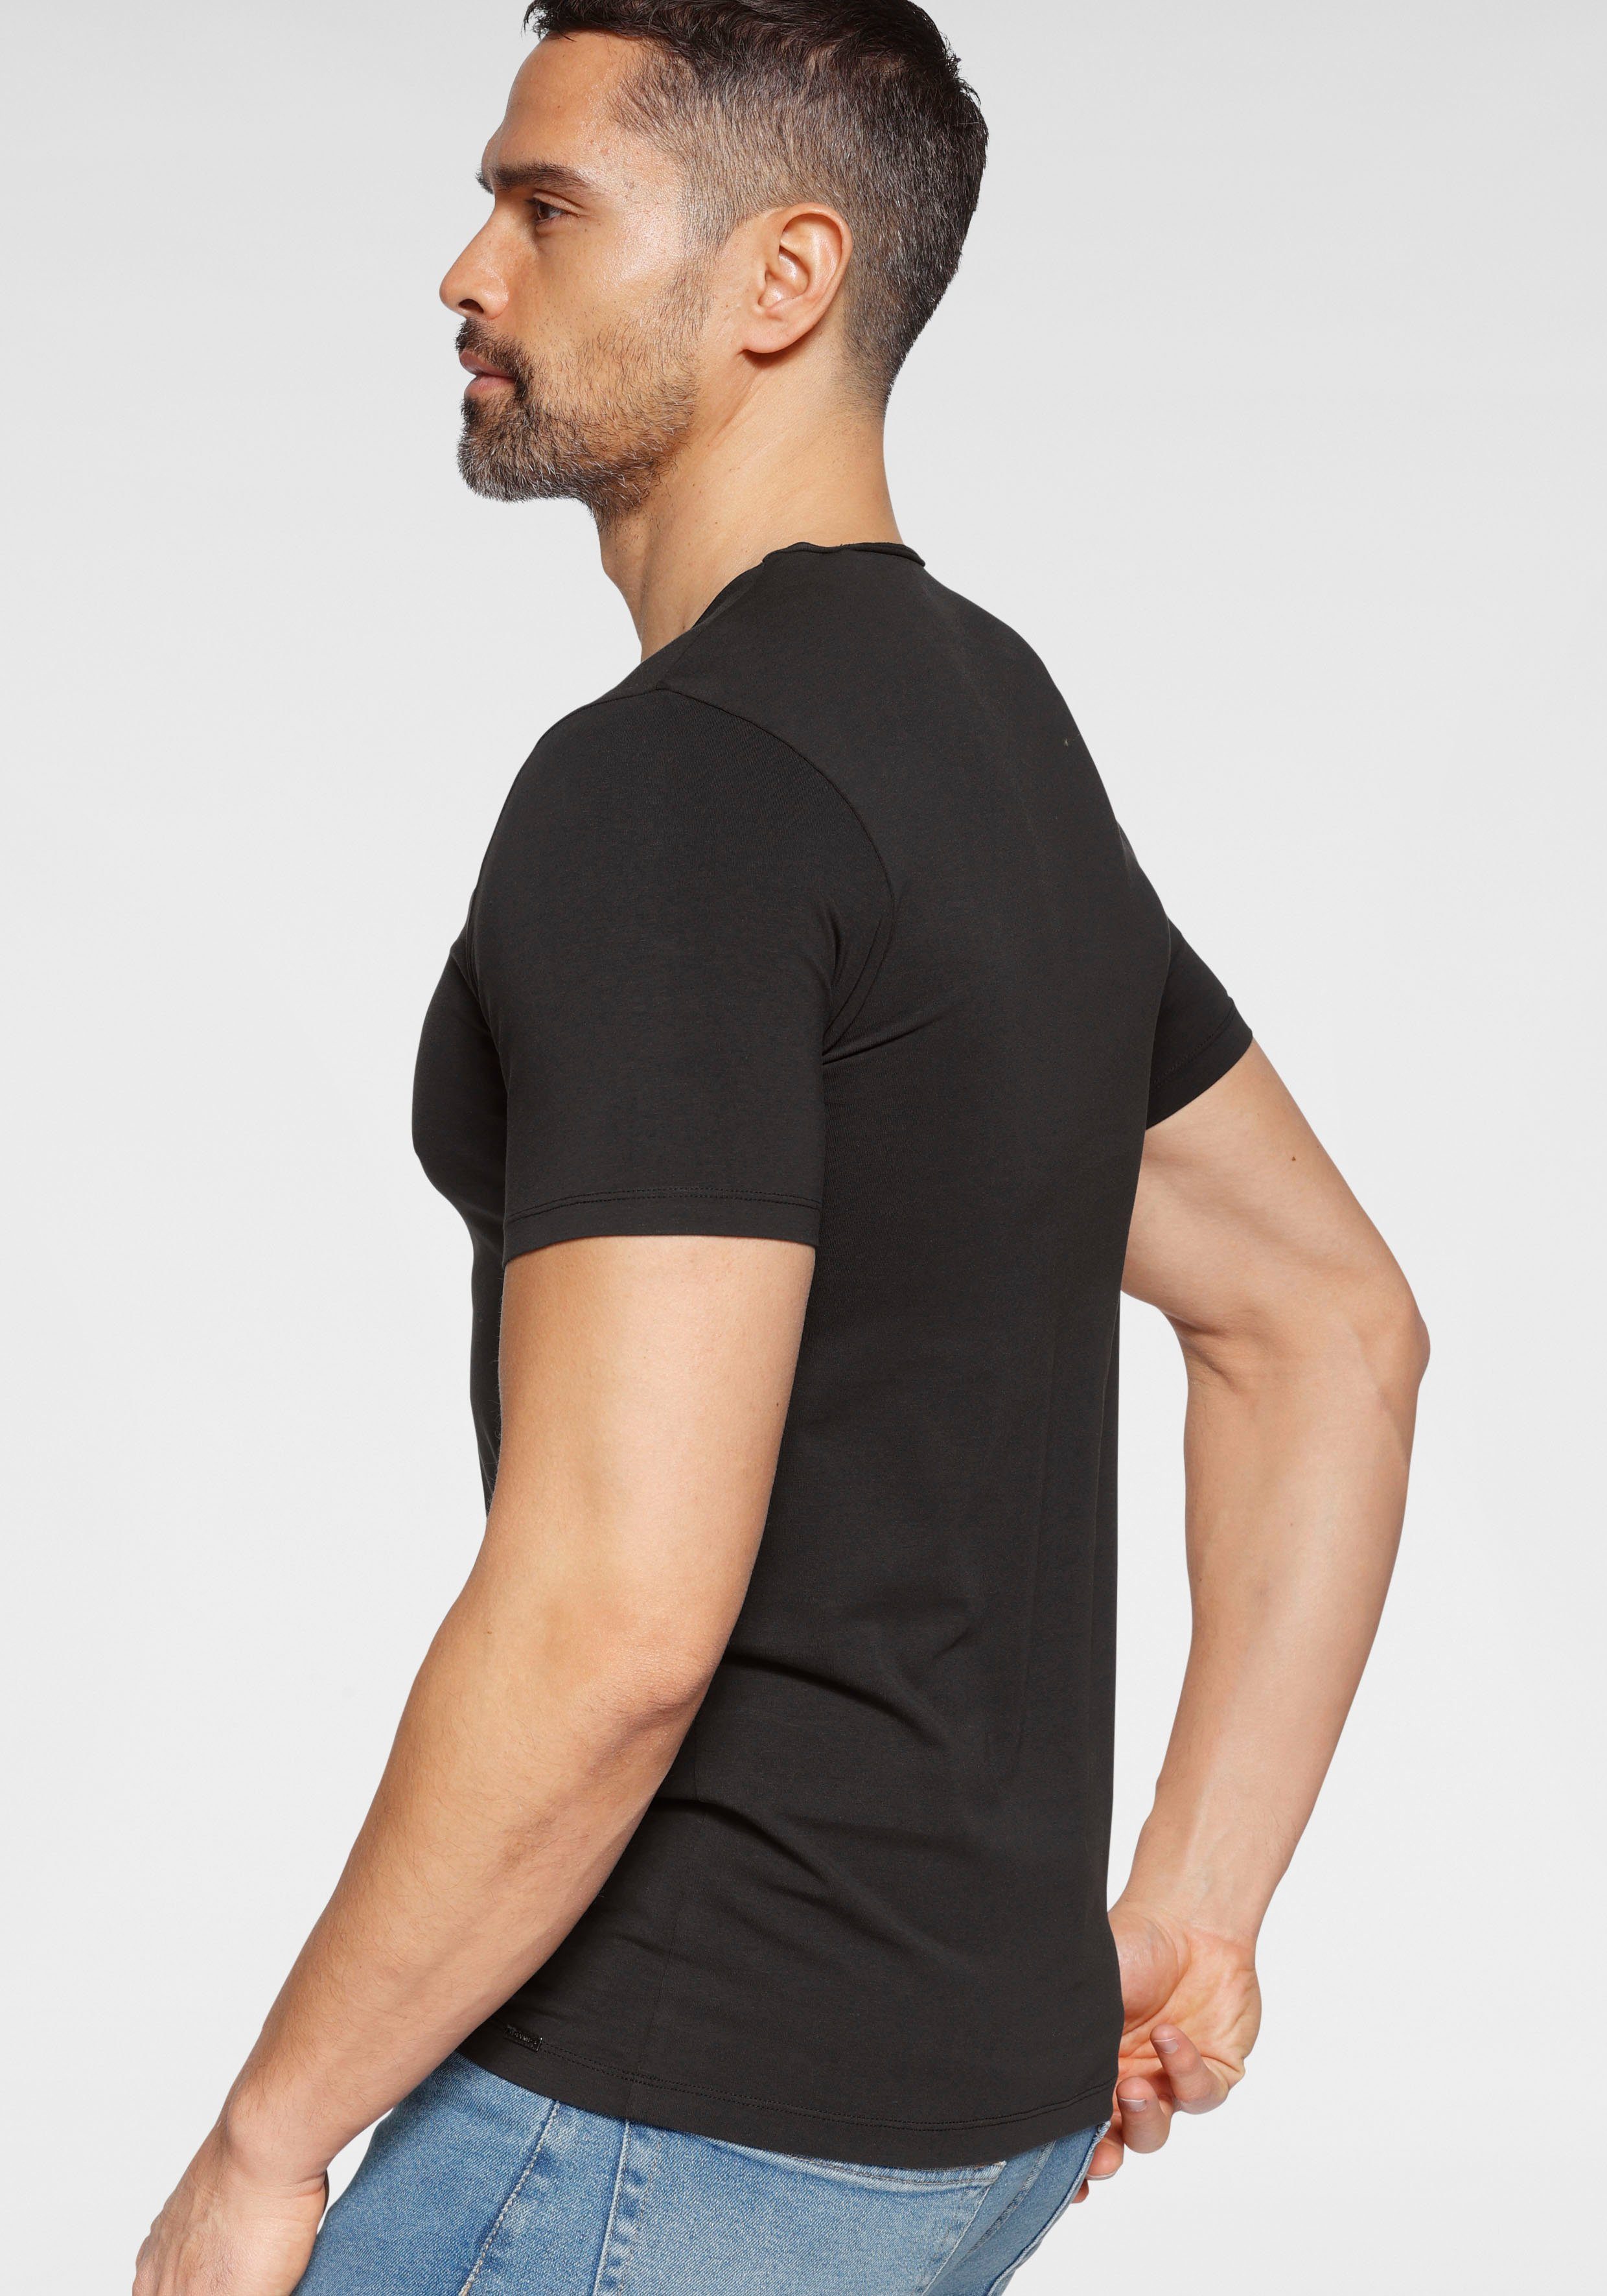 T-Shirt body Five aus fit Level OLYMP Jersey feinem schwarz